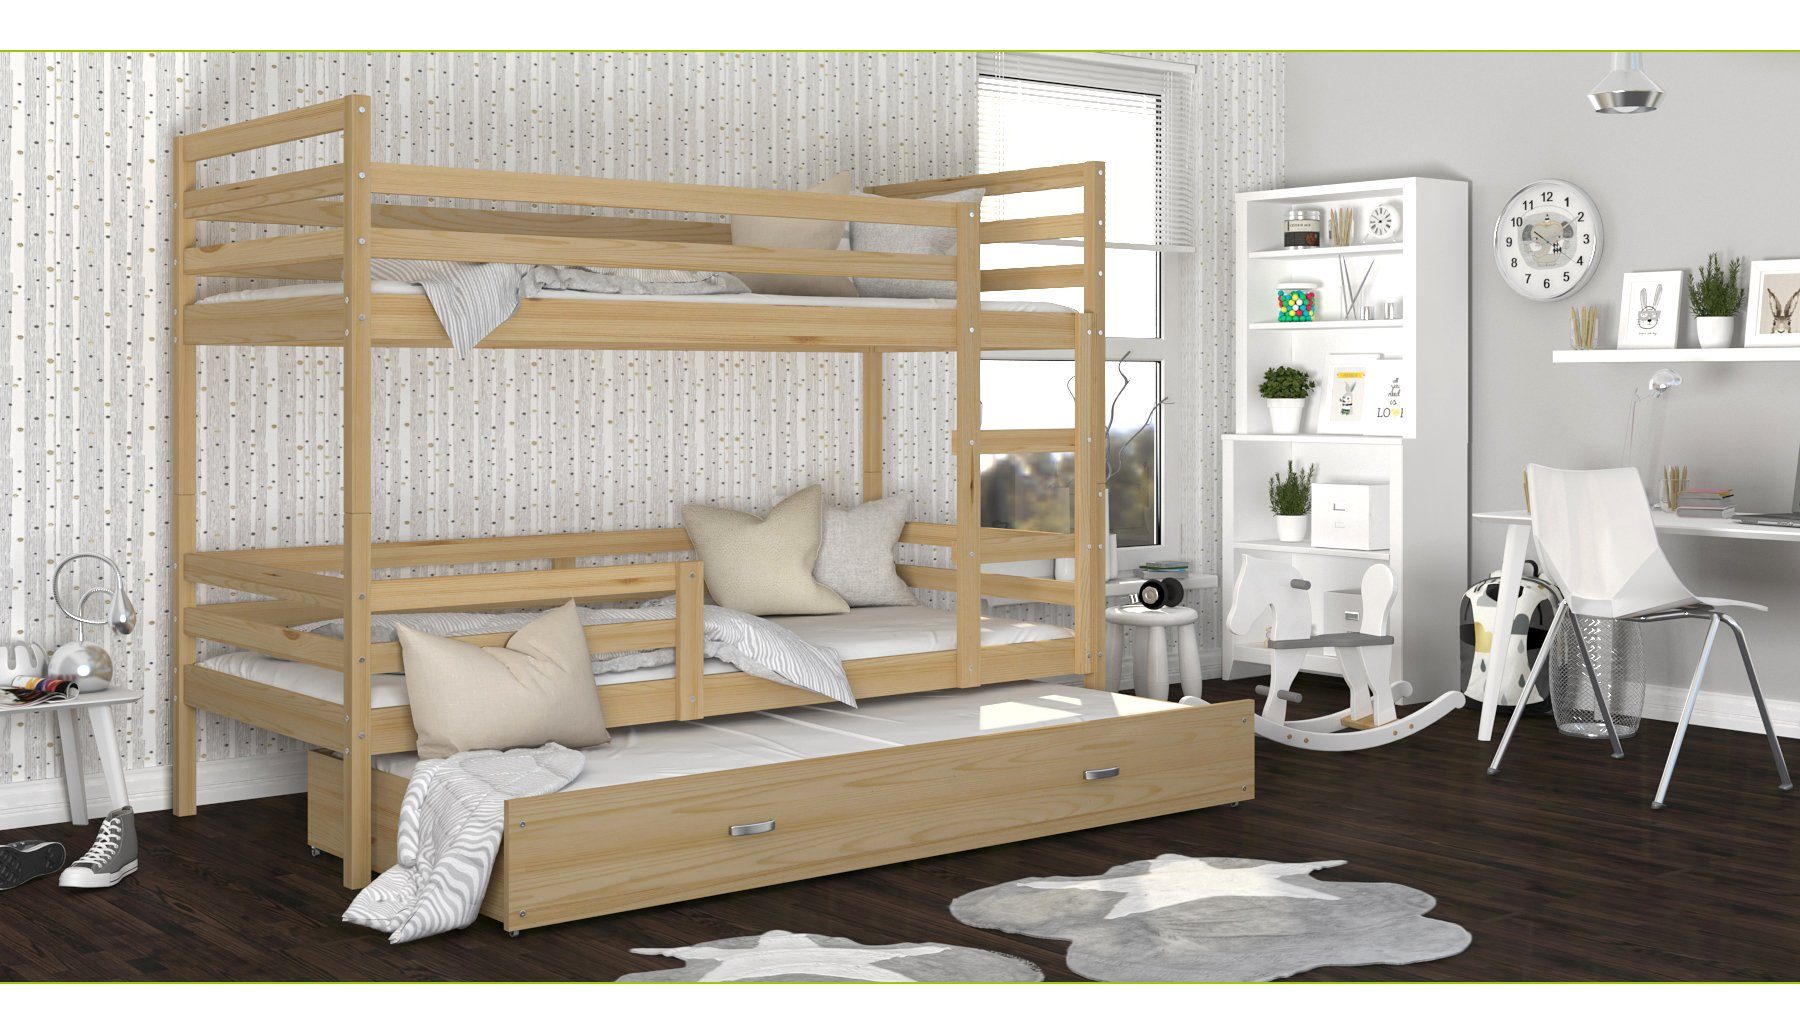 Bett (Flexibler Kinderbett Jerry Schublade, Sicherheitsbarriere), Möbelplatte Massivholz, Kiefer Lattenrost, 3 Siblo